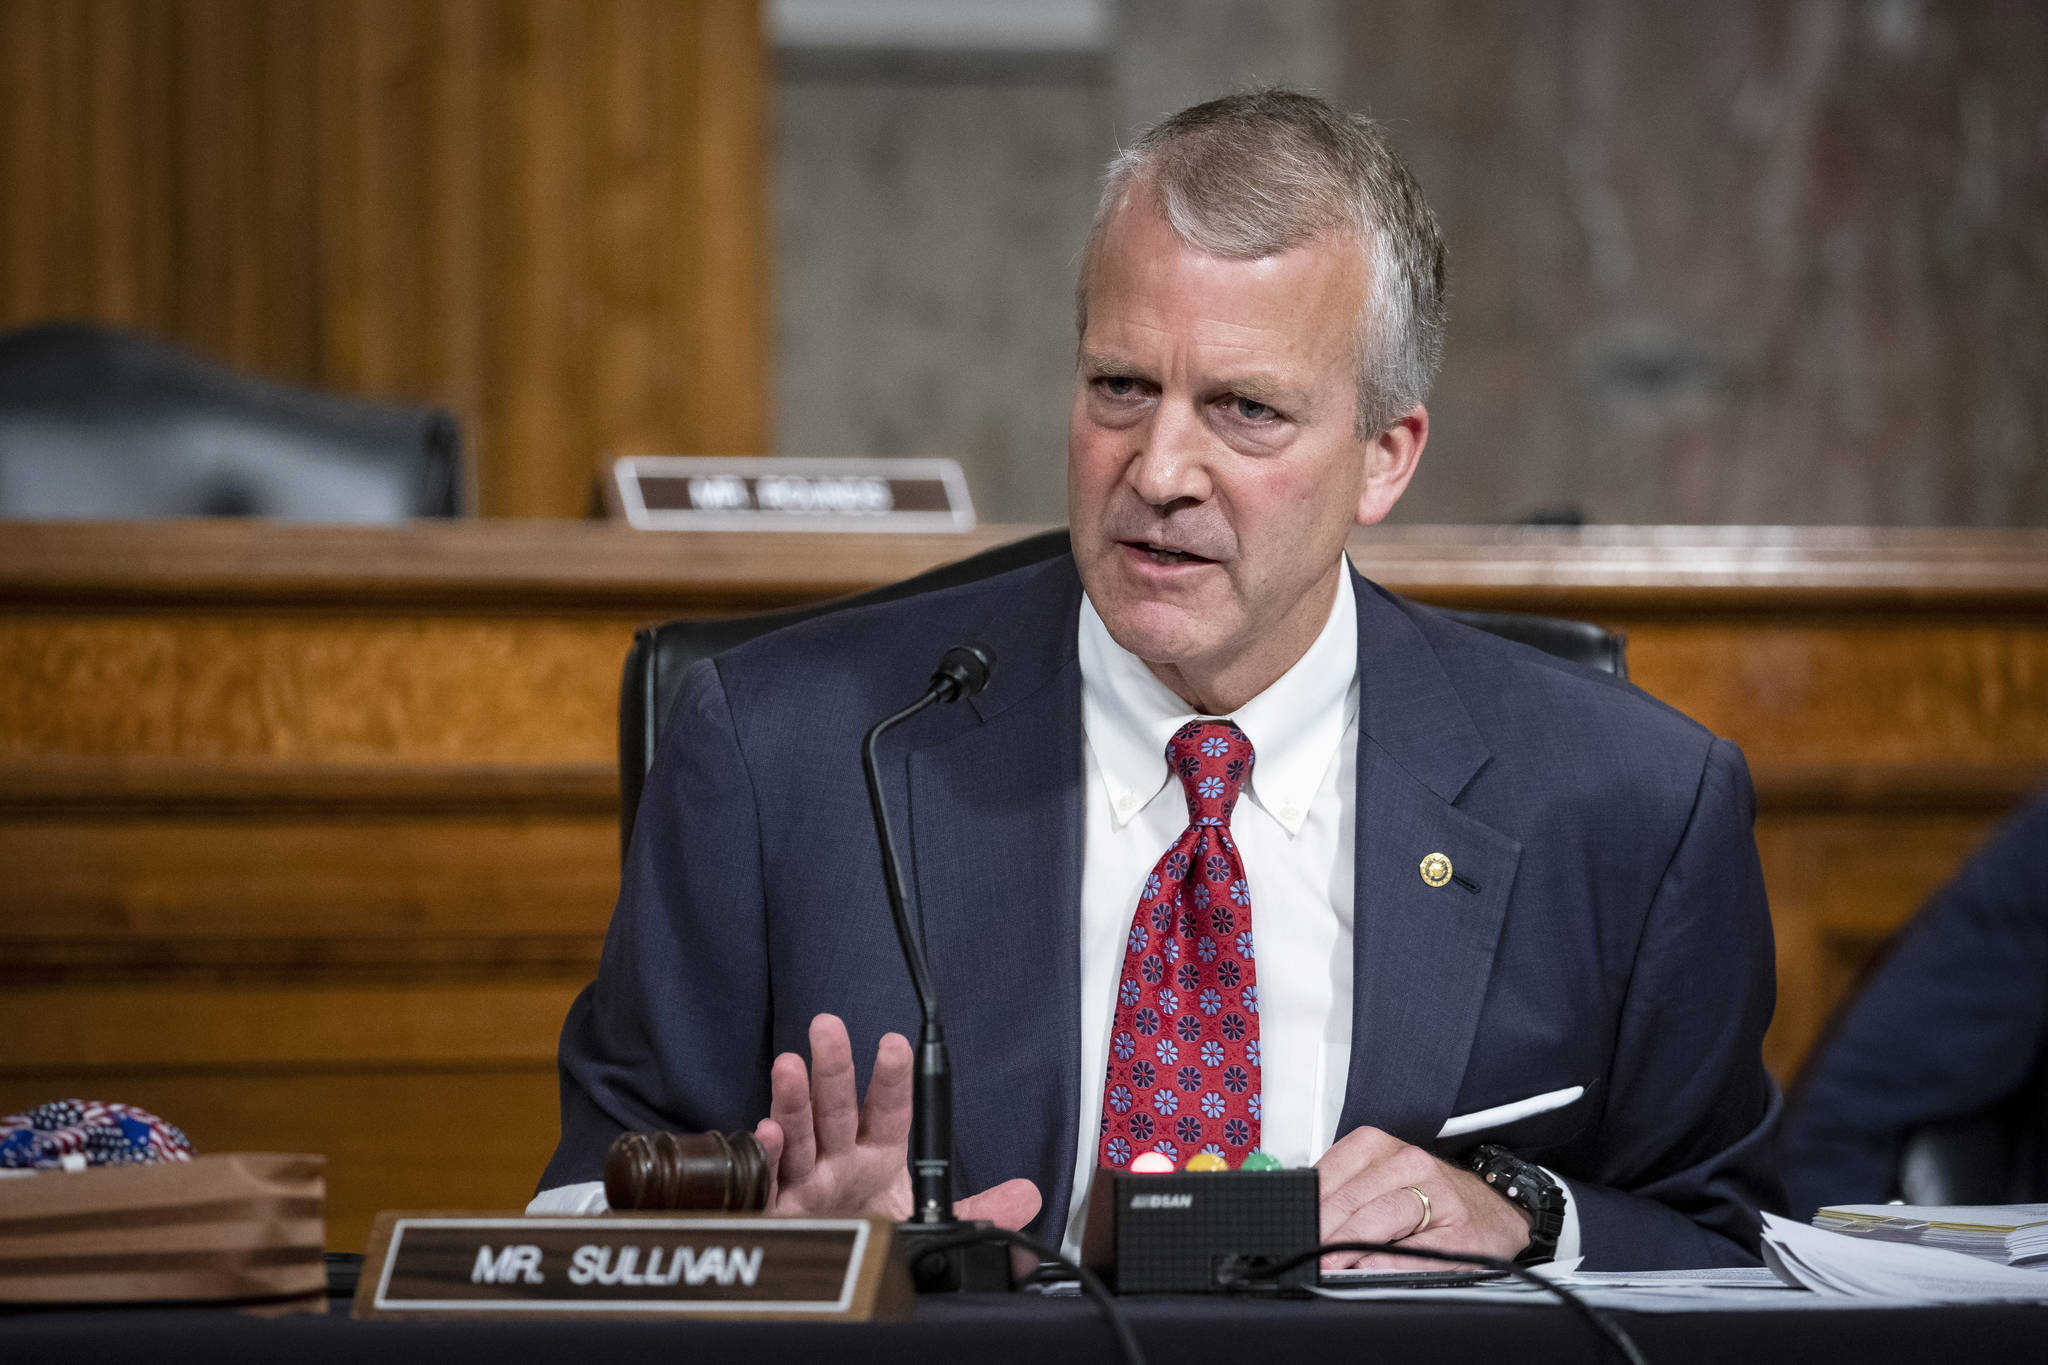 Al Drago / AP file
Sen. Dan Sullivan, R-Alaska, testifies during a hearing on Capitol Hill on May 7. Sullivan on Wednesday won reelection in Alaska, defeating independent Al Gross.